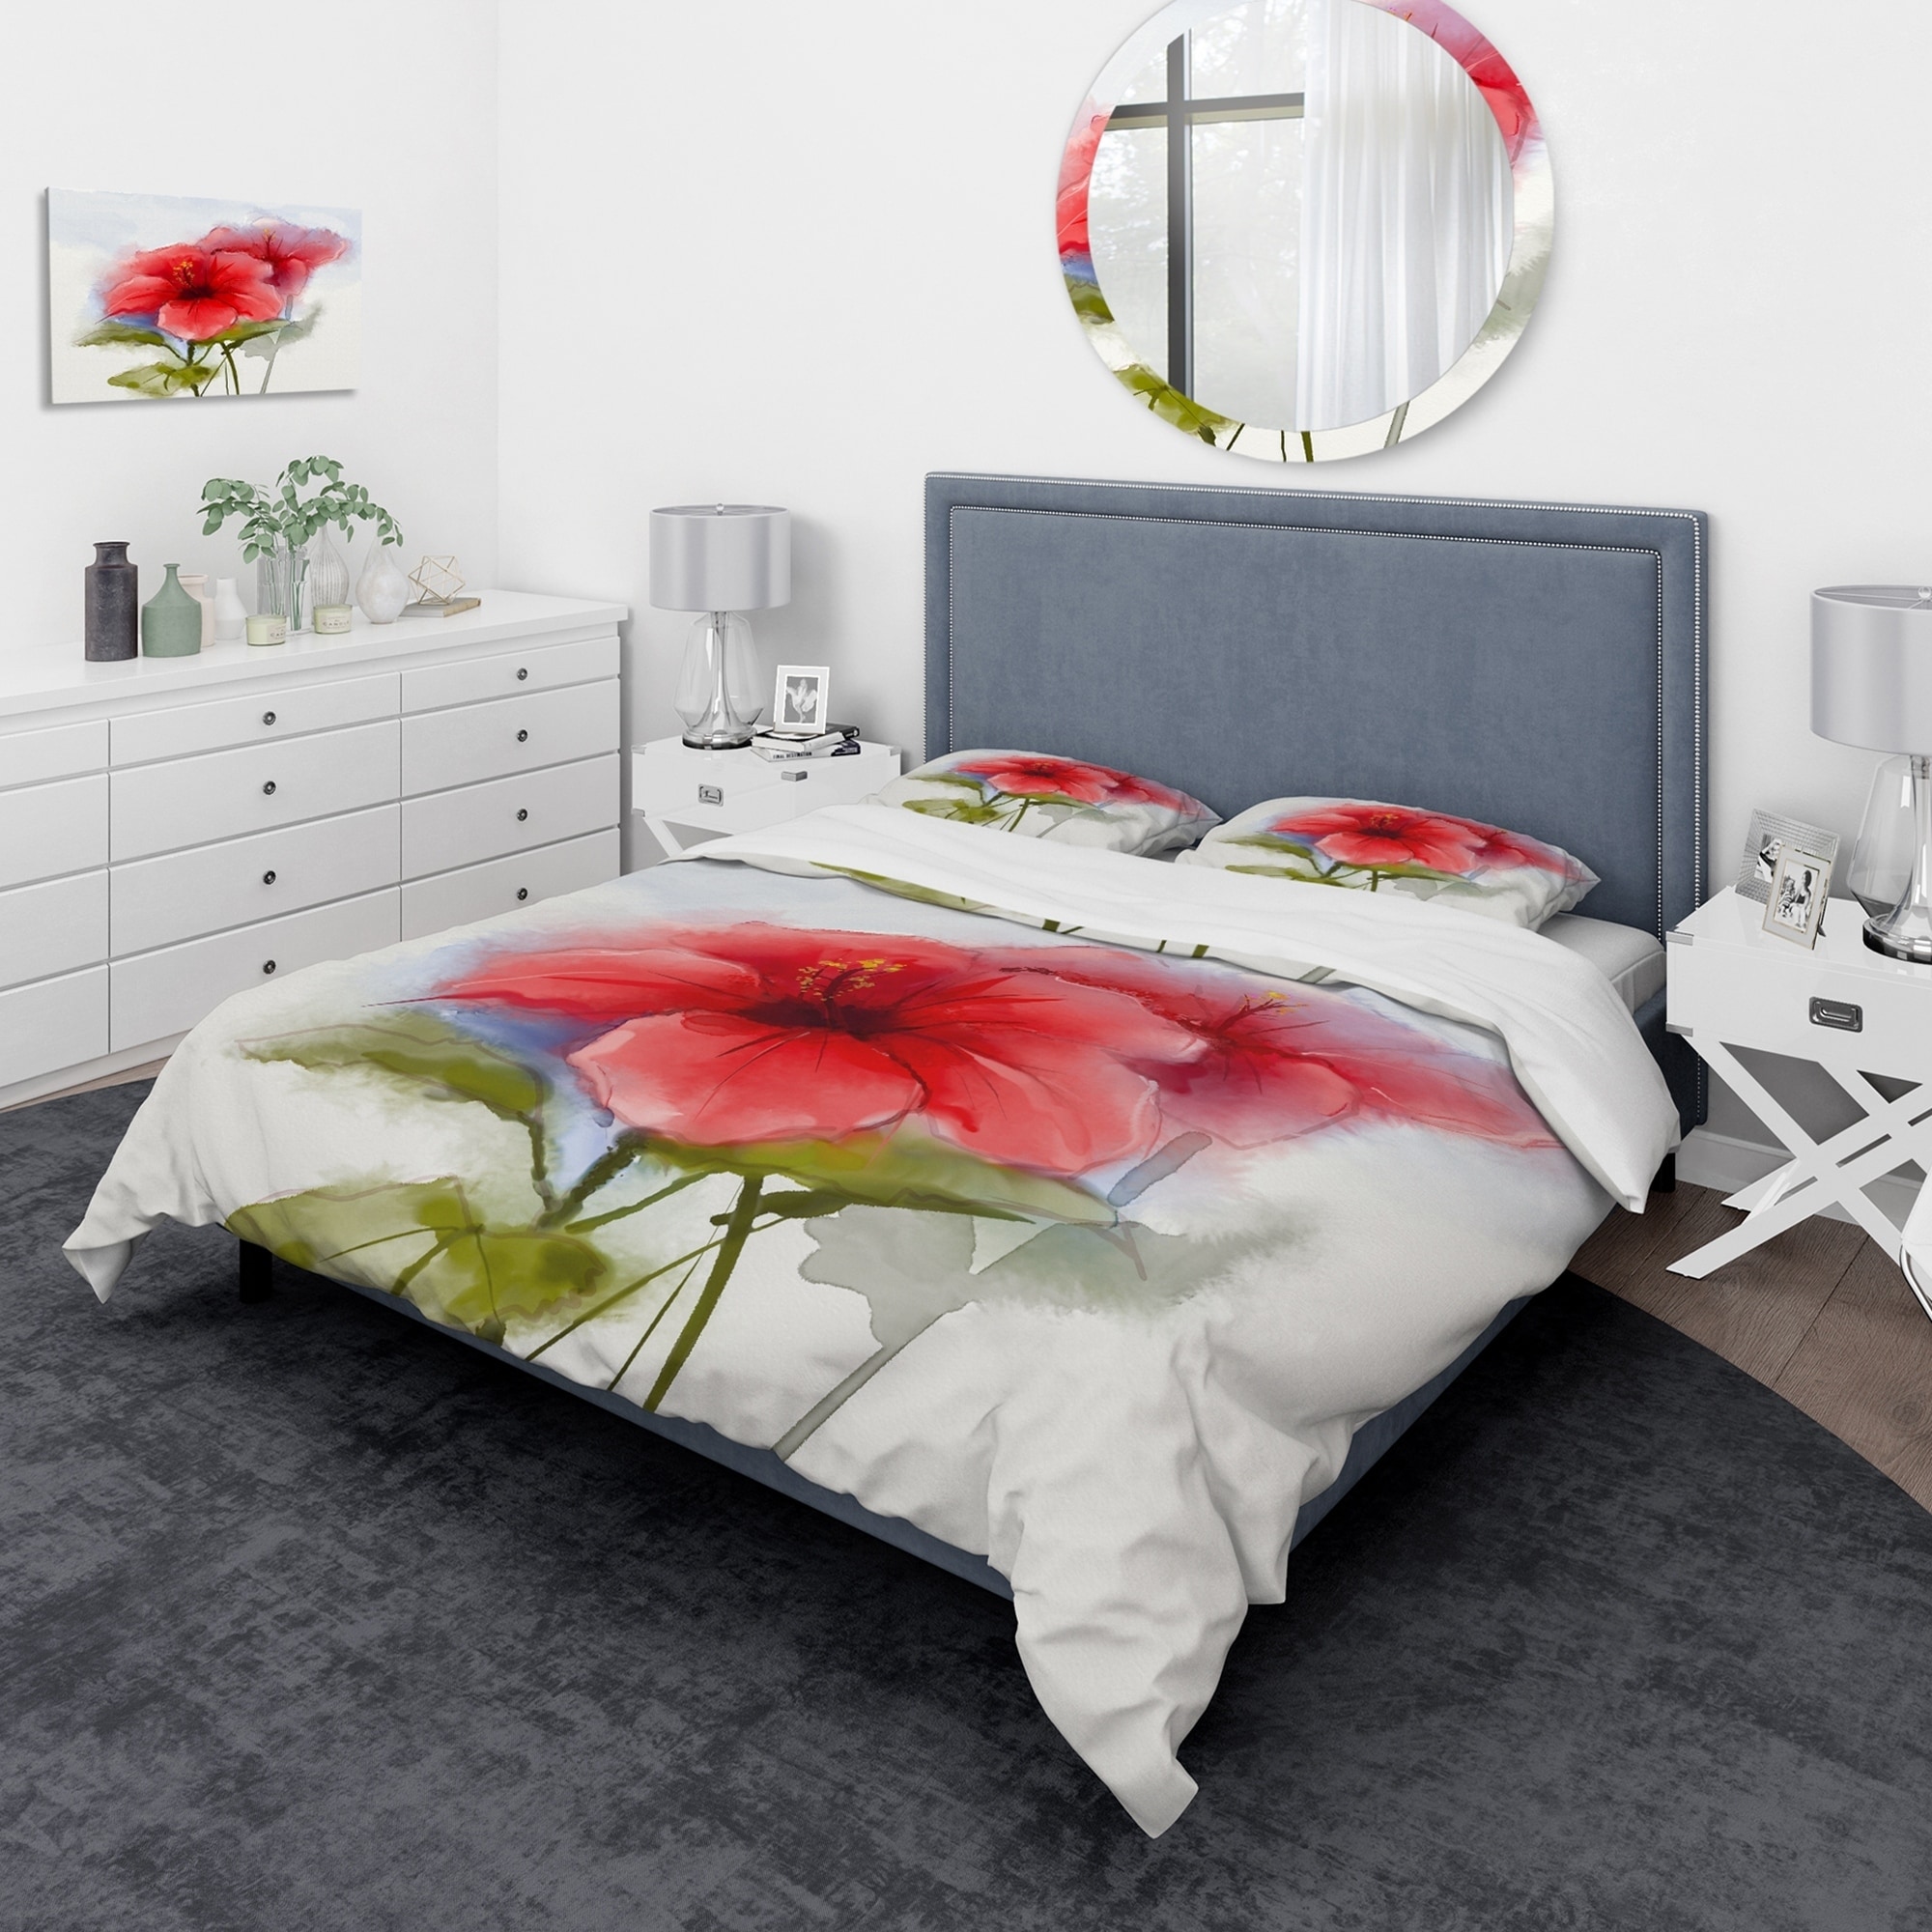 https://ak1.ostkcdn.com/images/products/23507386/Designart-Watercolor-Painting-Red-Hibiscus-Flower-Traditional-Bedding-Set-Duvet-Cover-Shams-b62cfce1-0b92-4381-b116-f3ce57c3cc3f.jpg